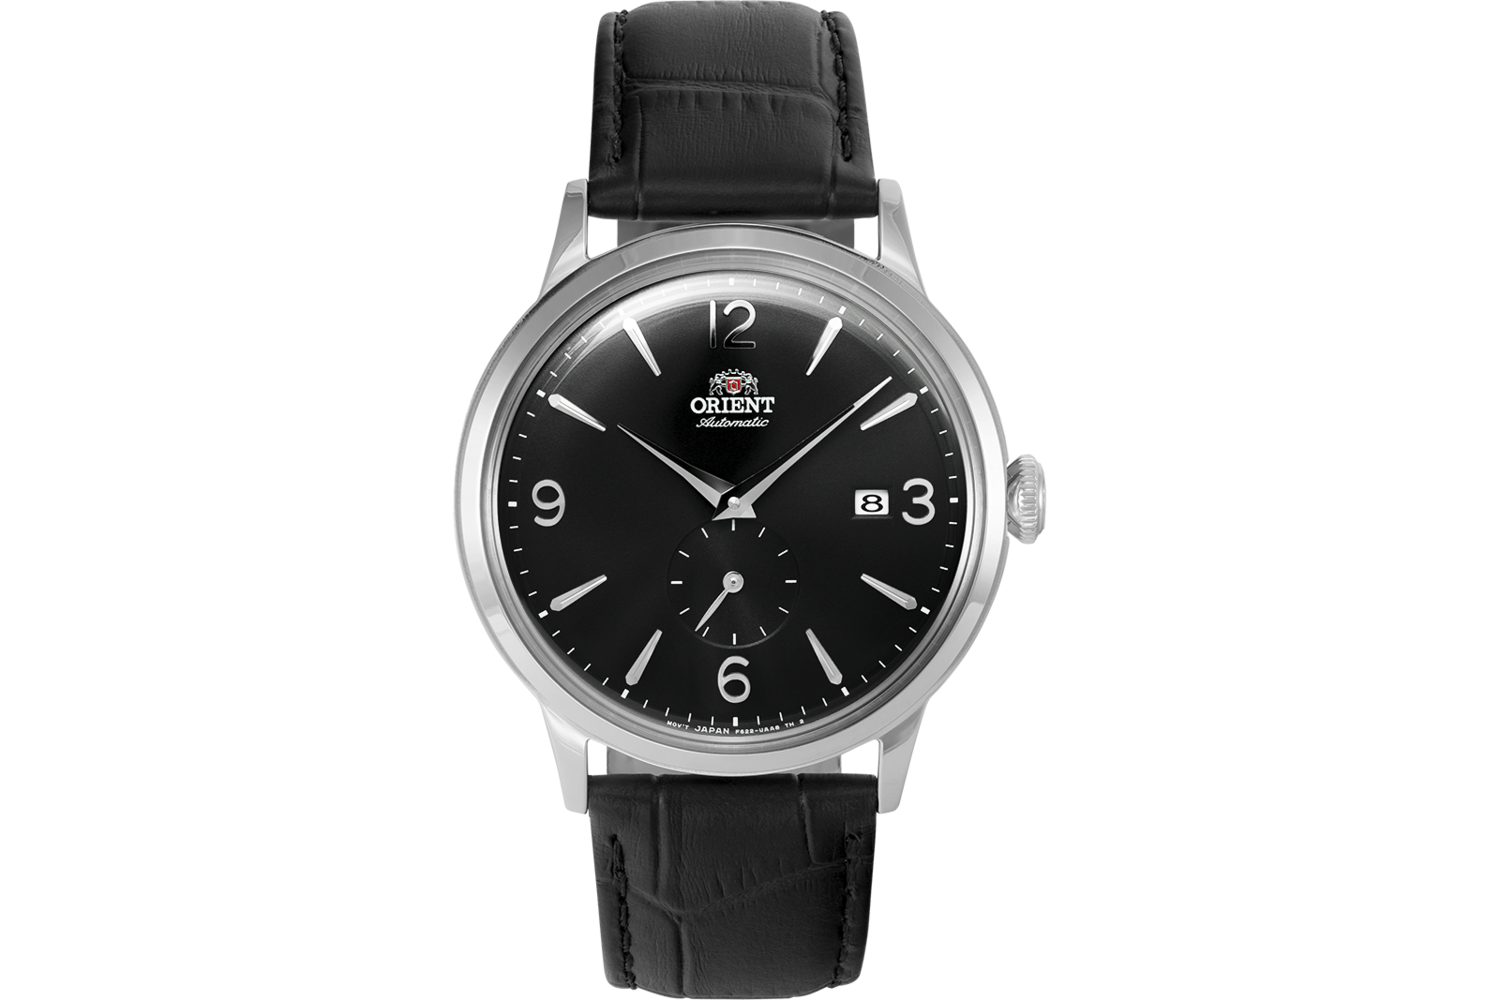 reloj automático hombre Orient Bambino Small Seconds RA-AP0005B dial negro 40.5mm correa cuero (admite cuerda manual)